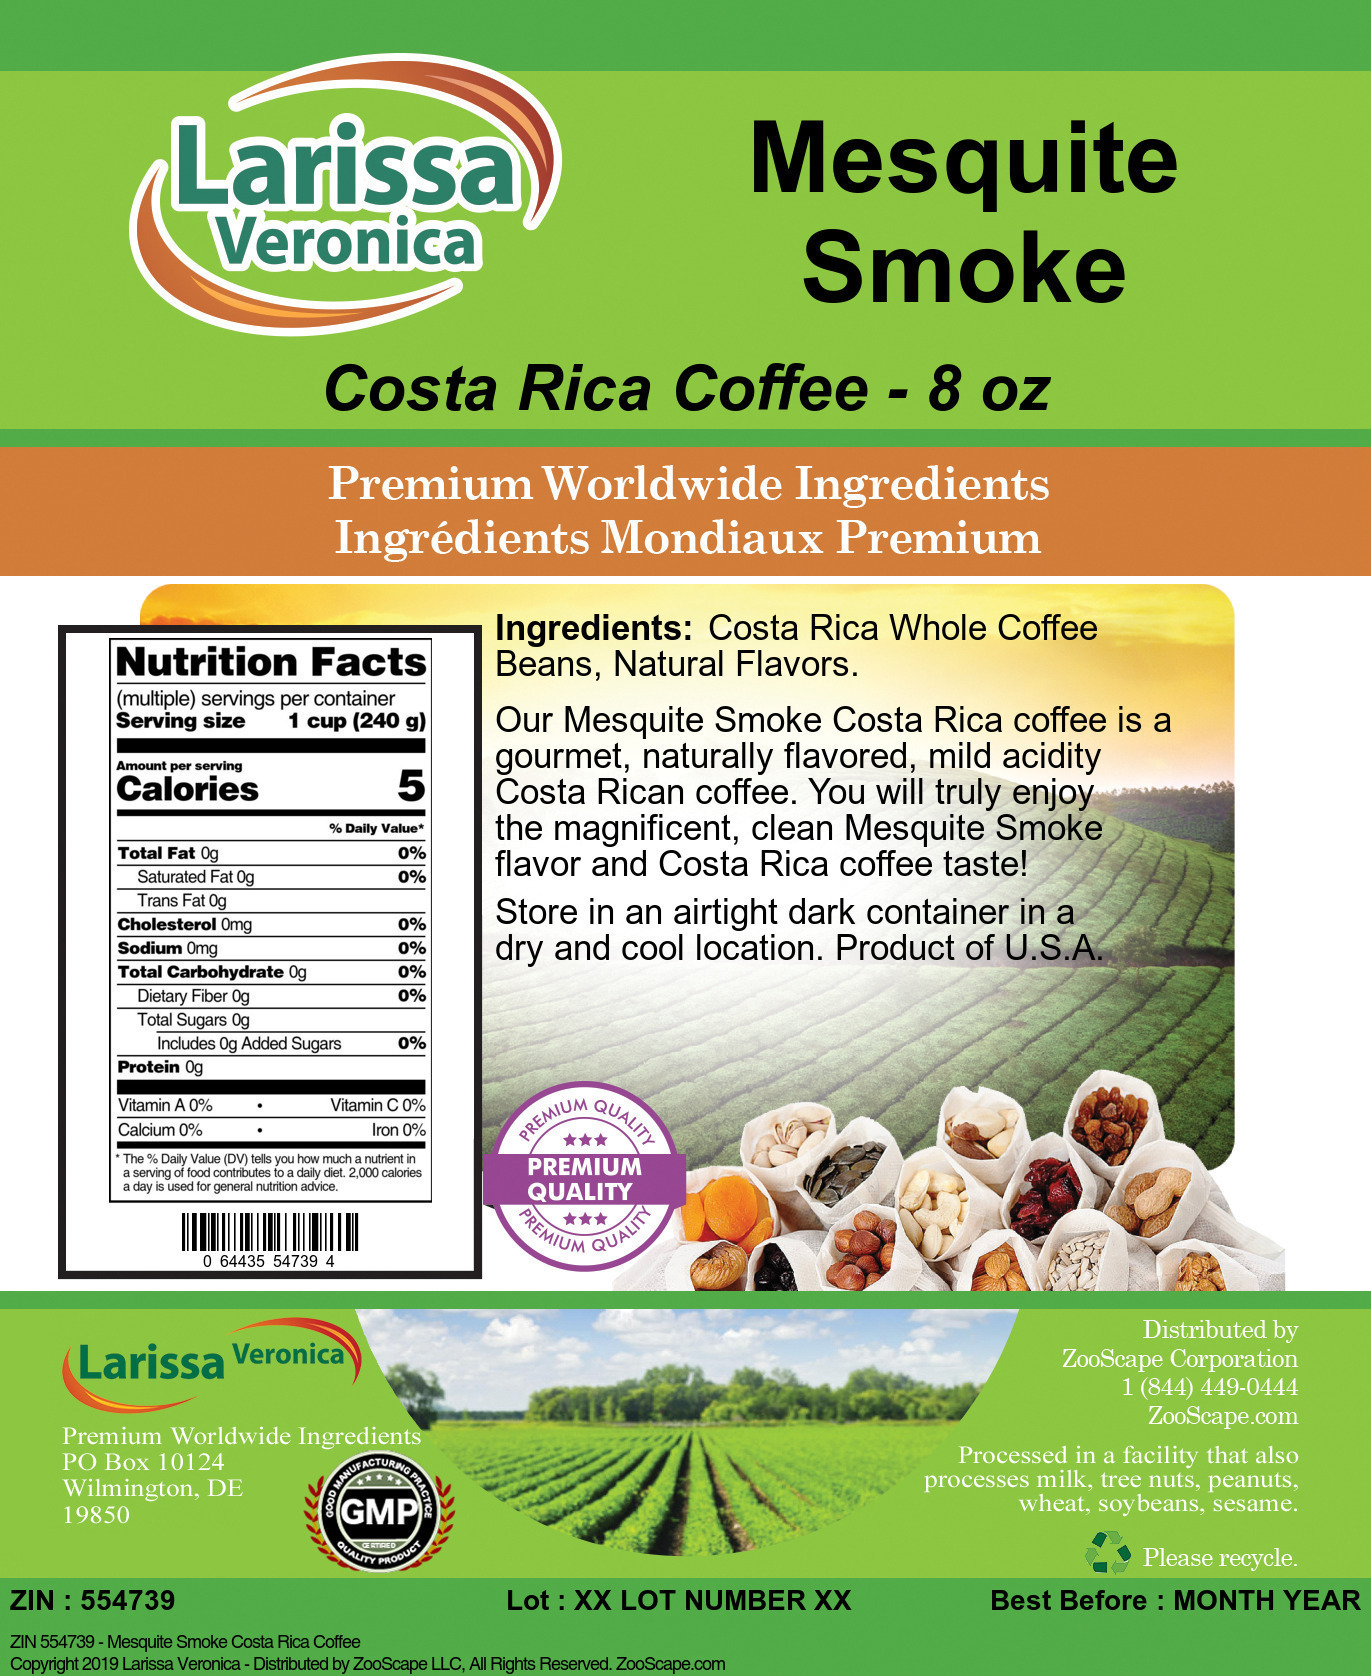 Mesquite Smoke Costa Rica Coffee - Label